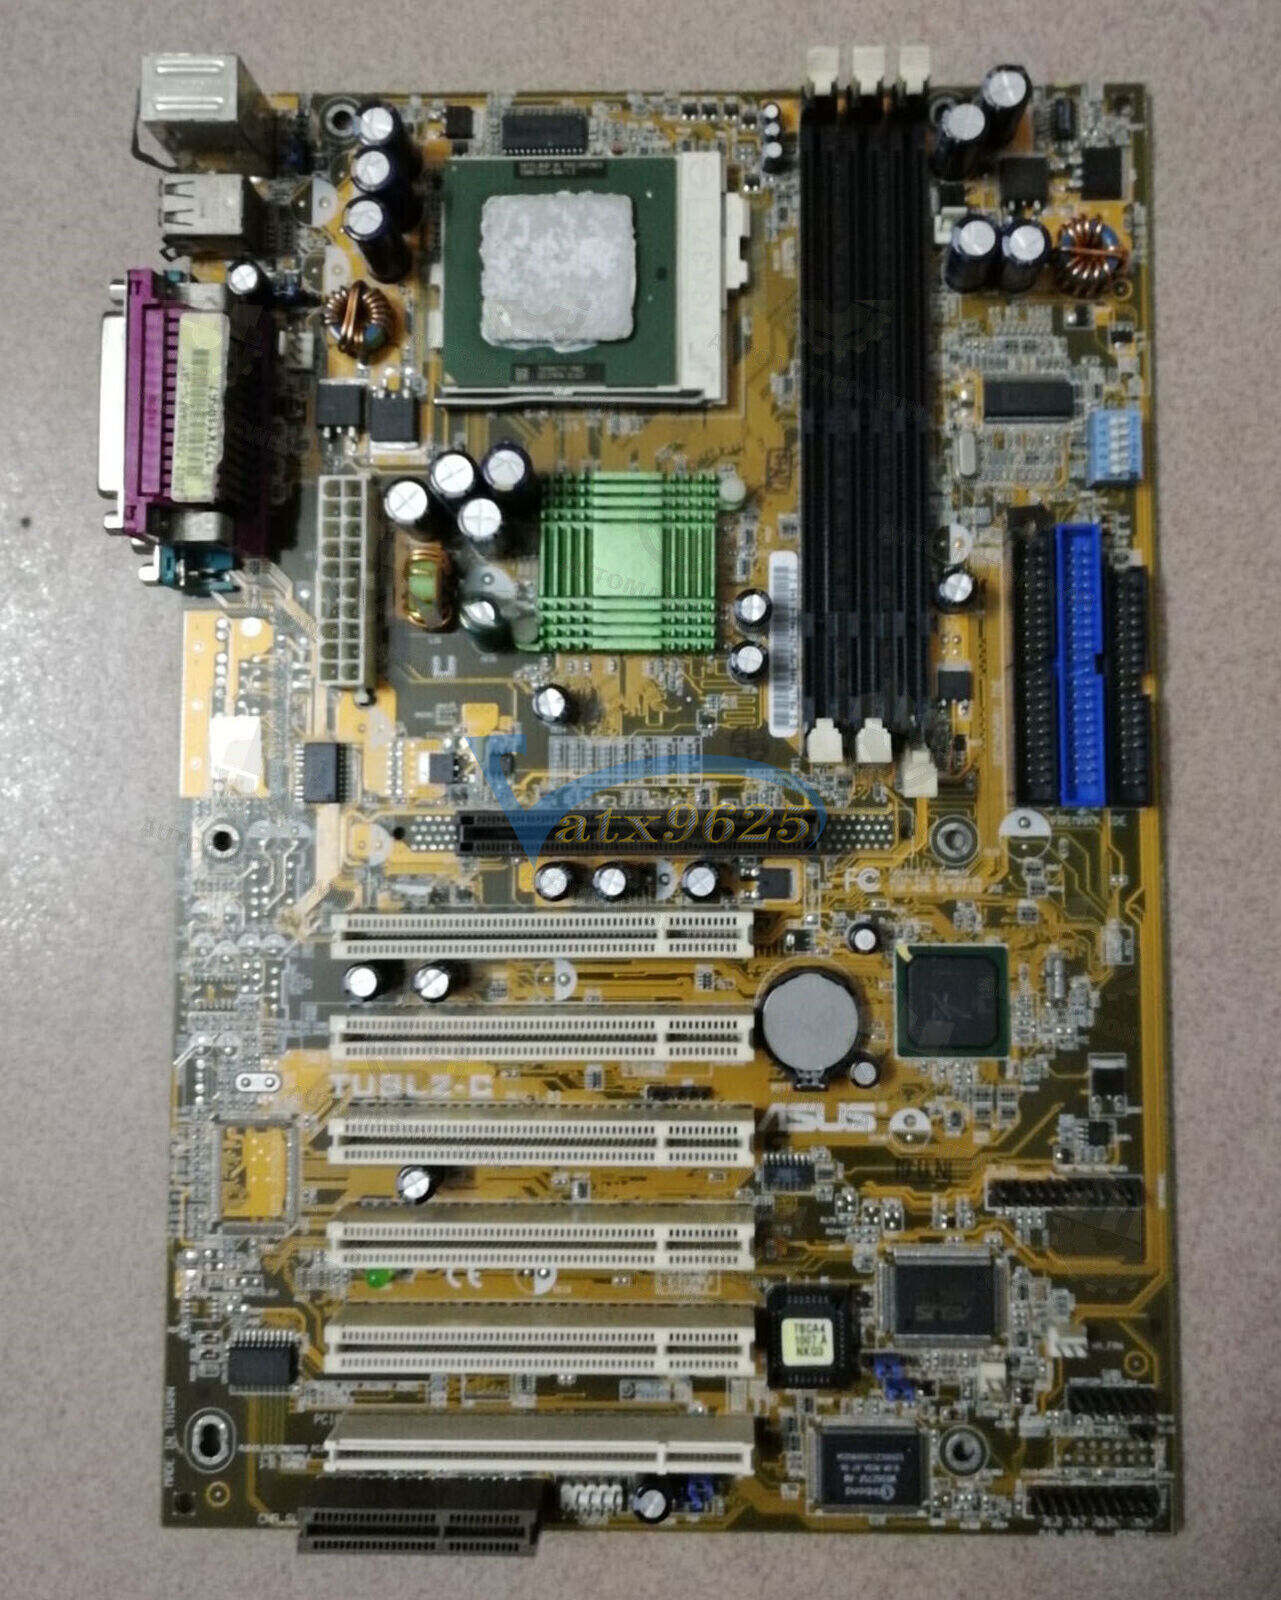 Used ASUS TUSL2-C 815P 370 motherboard 1PCS